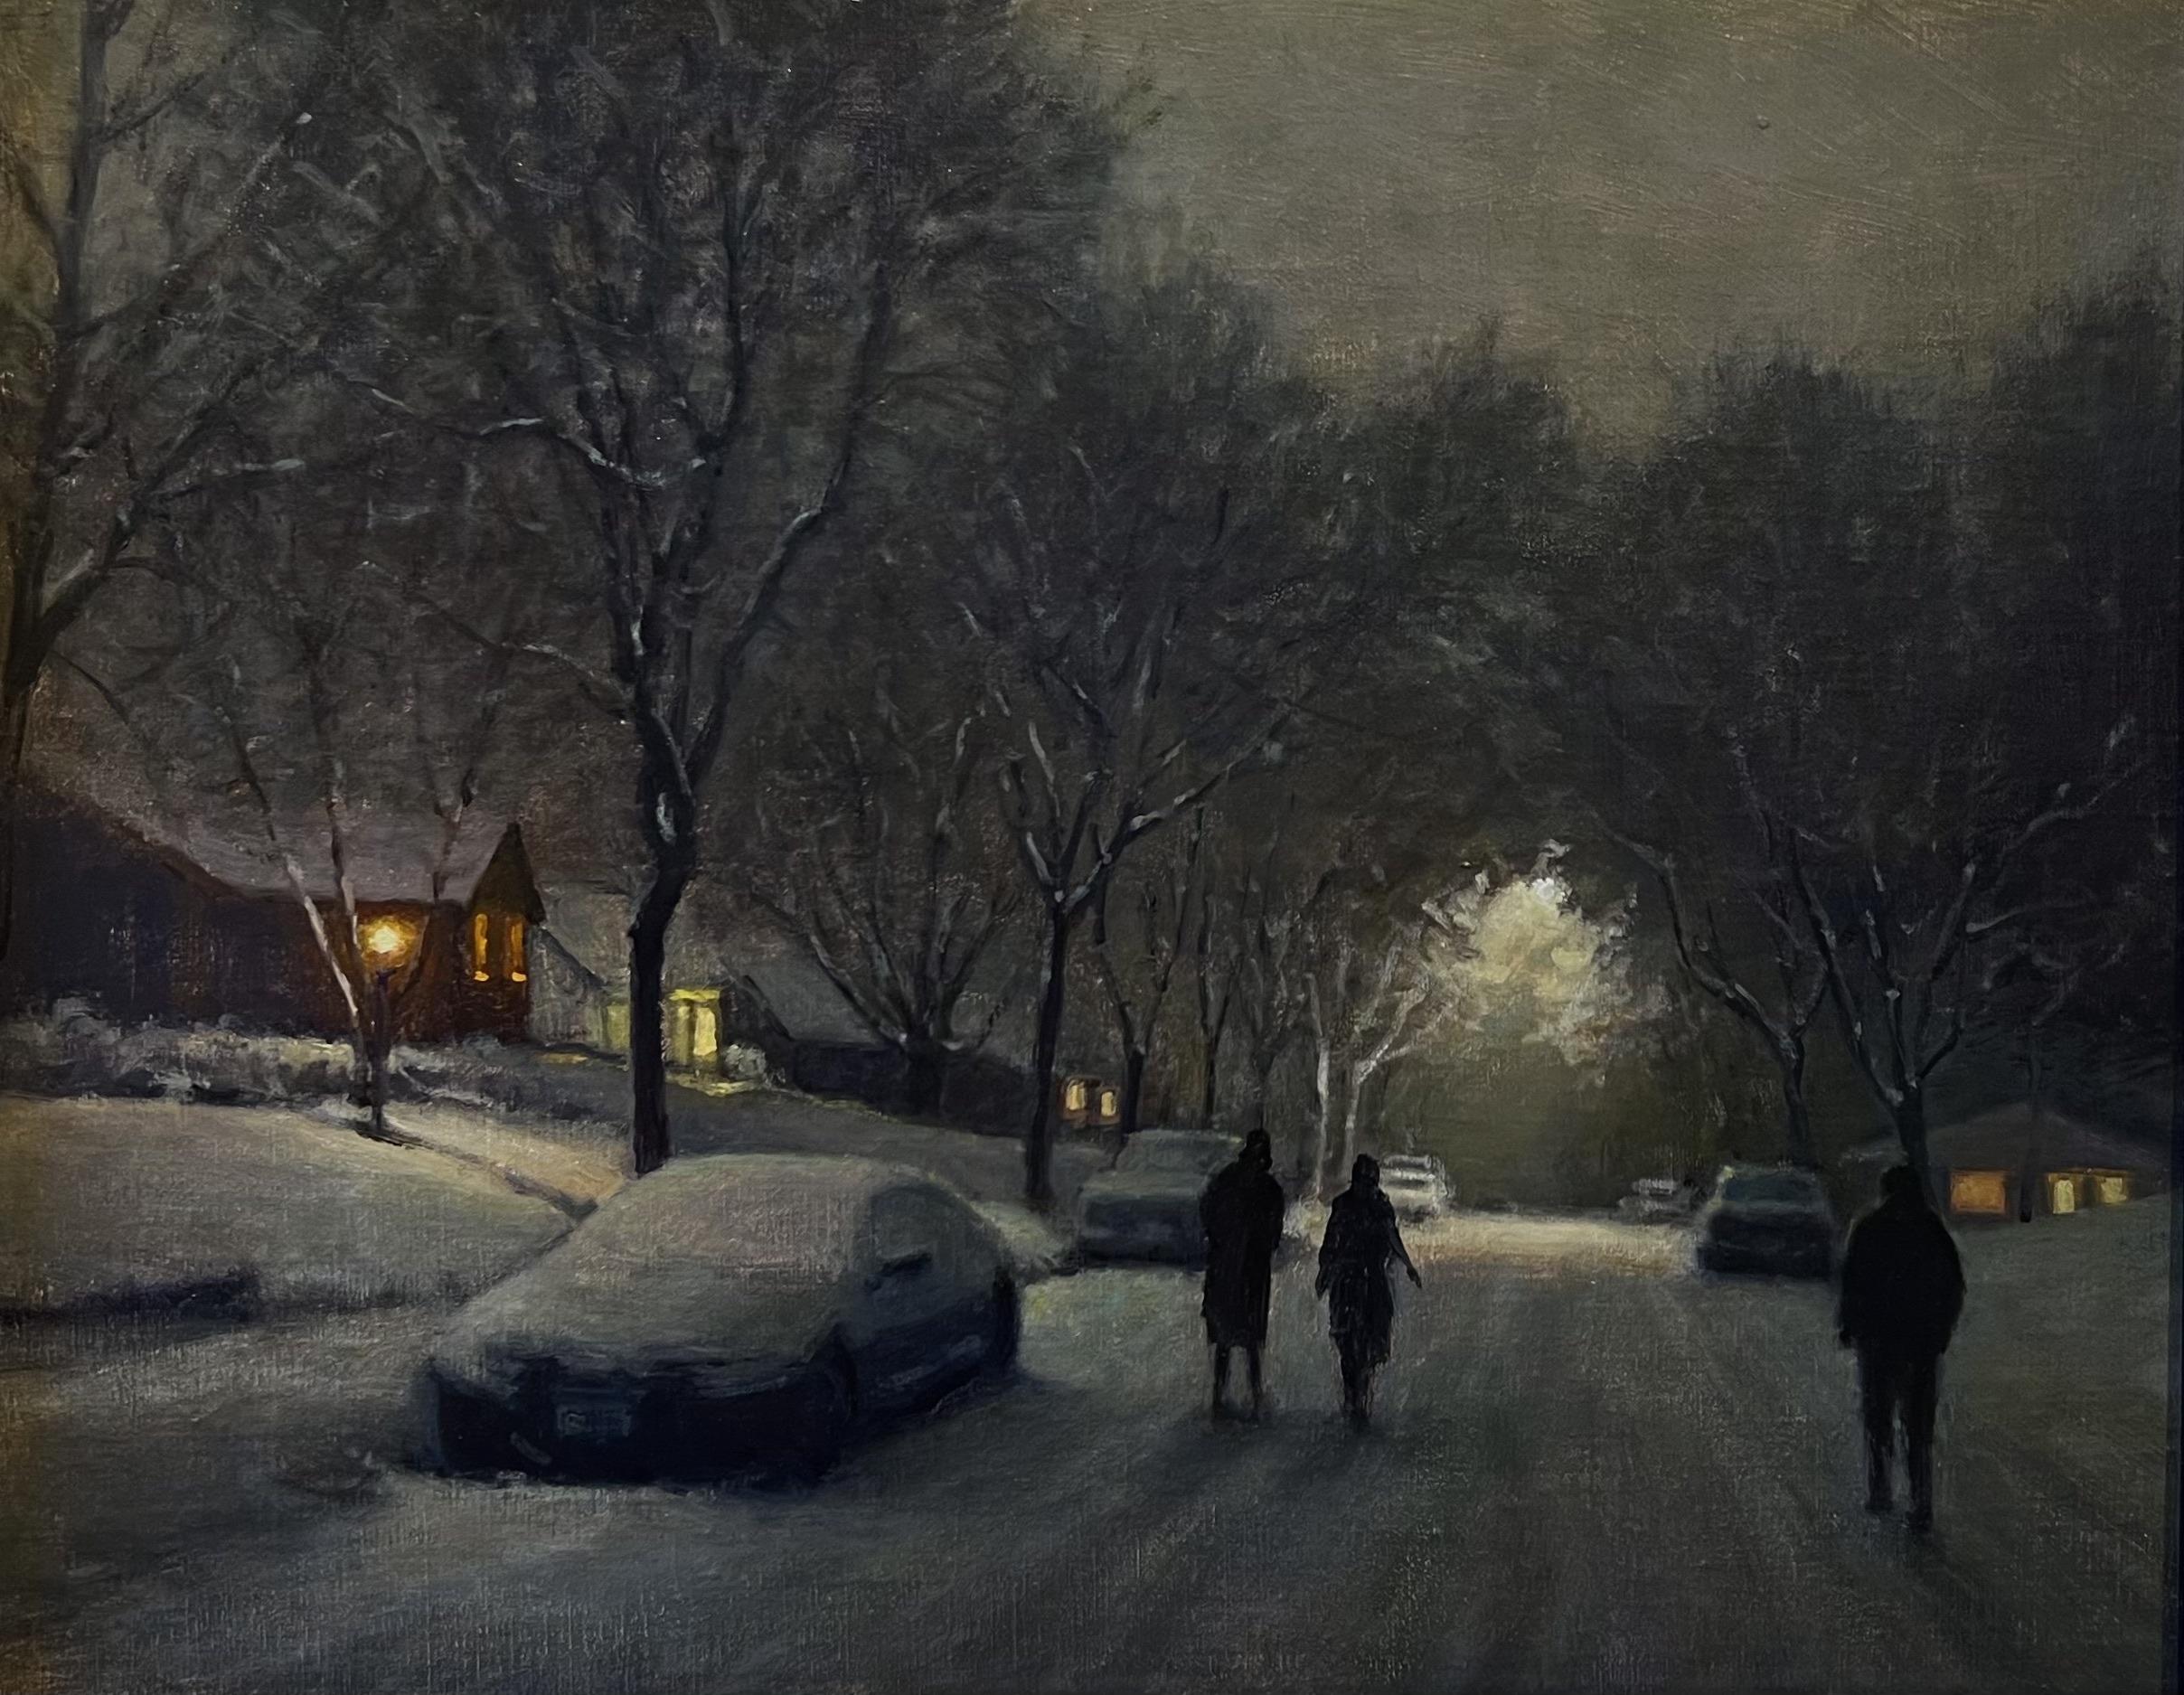 Unshoveled Sidewalks - Snowy American Realist oil painting of suburbia  - Painting by Carl Bretzke